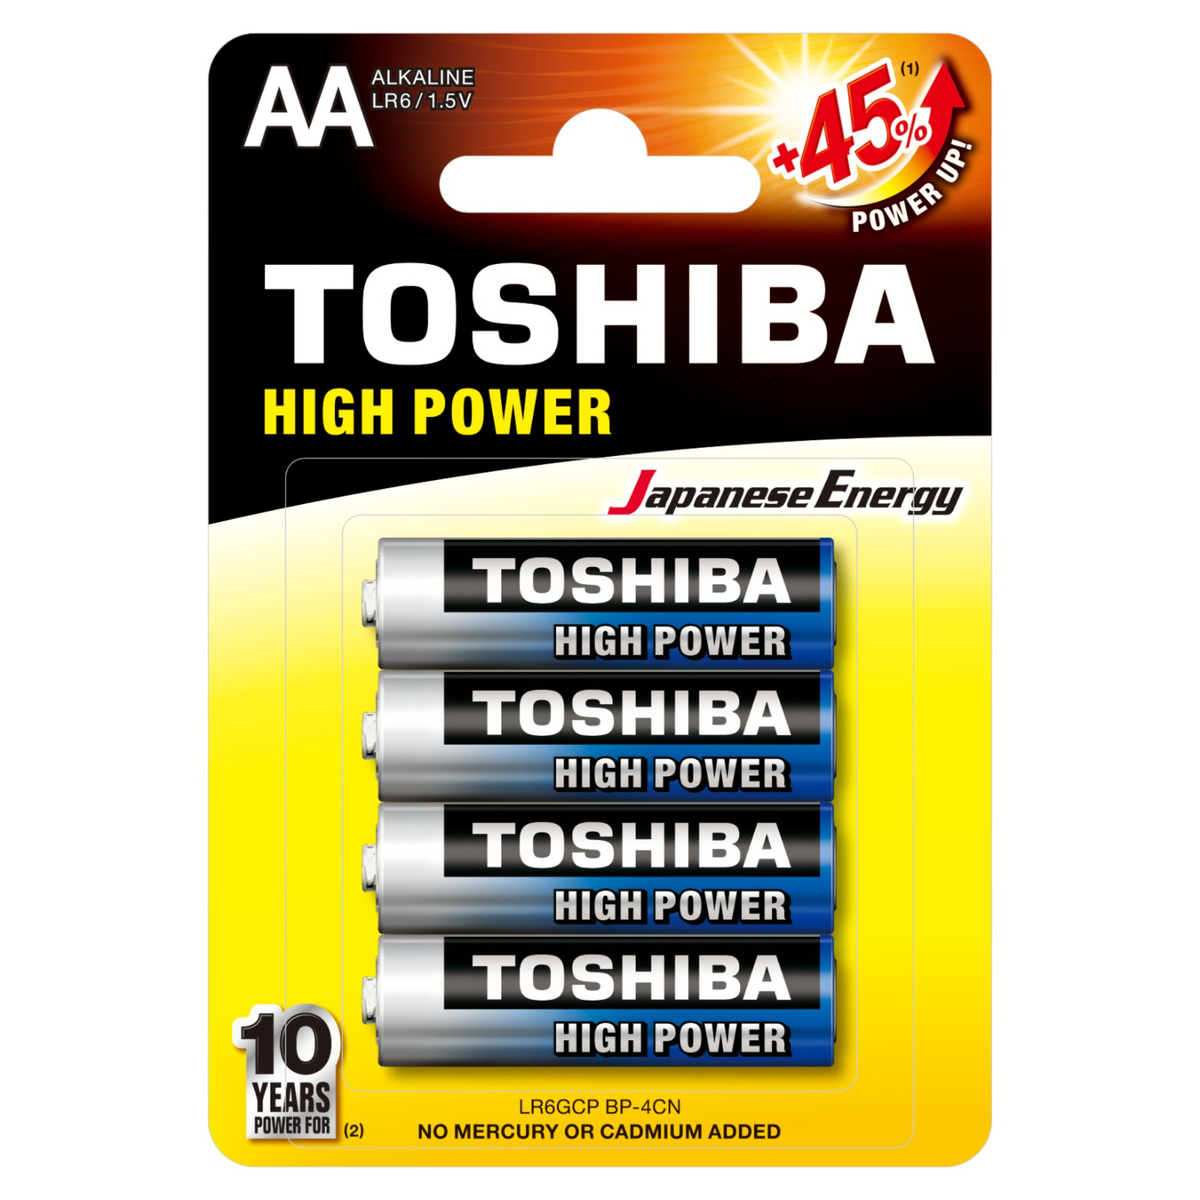 Toshiba High Power Alkaline AA Battery, 1.5V x 4 Pcs, LR6